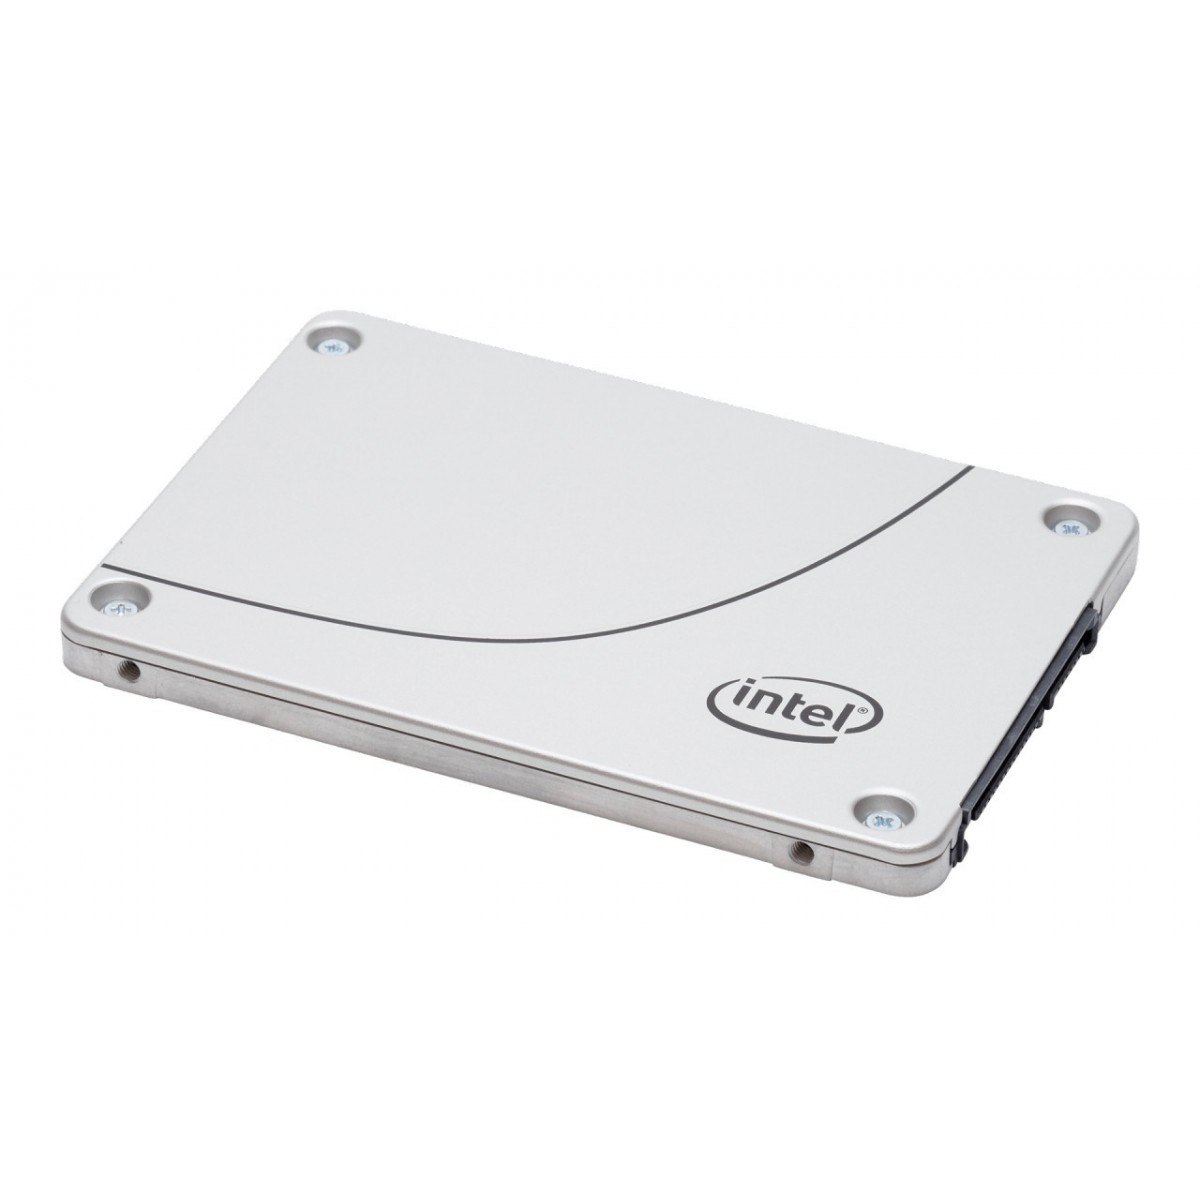 Intel DC S4600 - 1900 GB - 2.5 - 500 MB/s - 6 Gbit/s